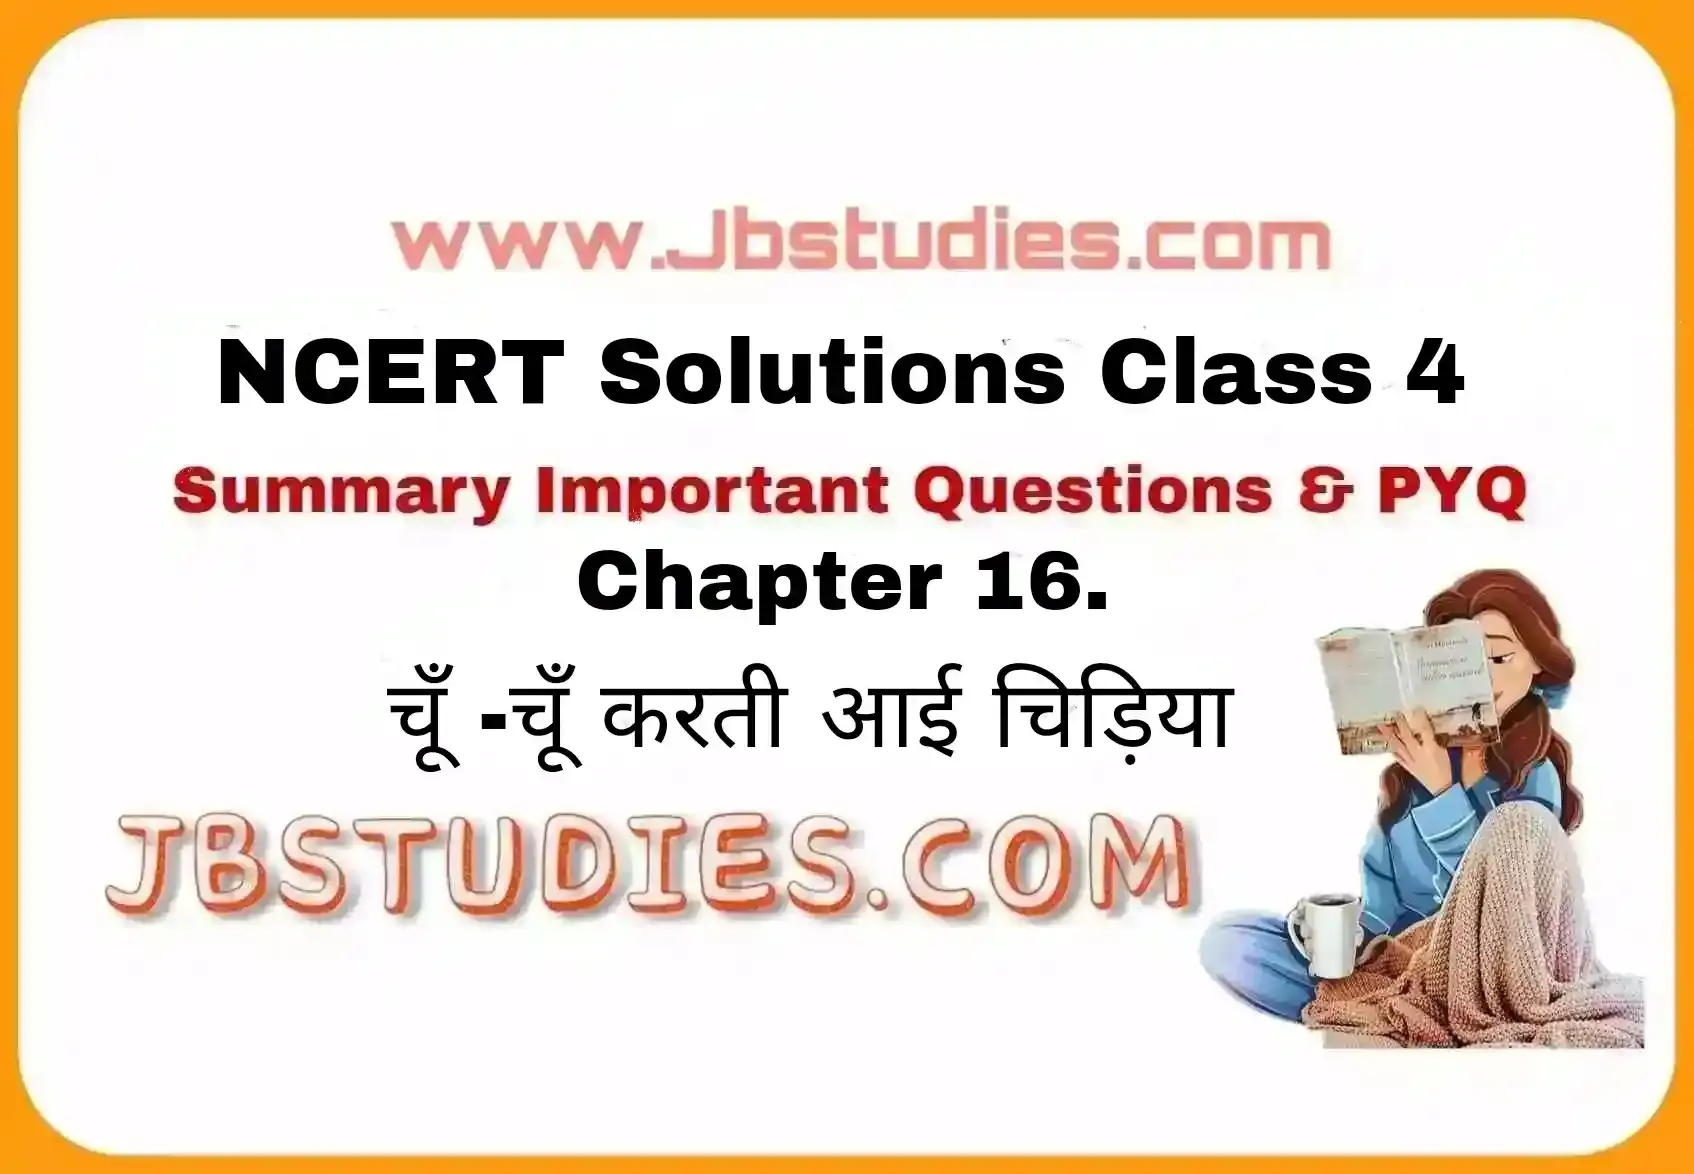 Solutions Class 4 आस-पास Chapter-16 (चूँ -चूँ करती आई चिड़िया)